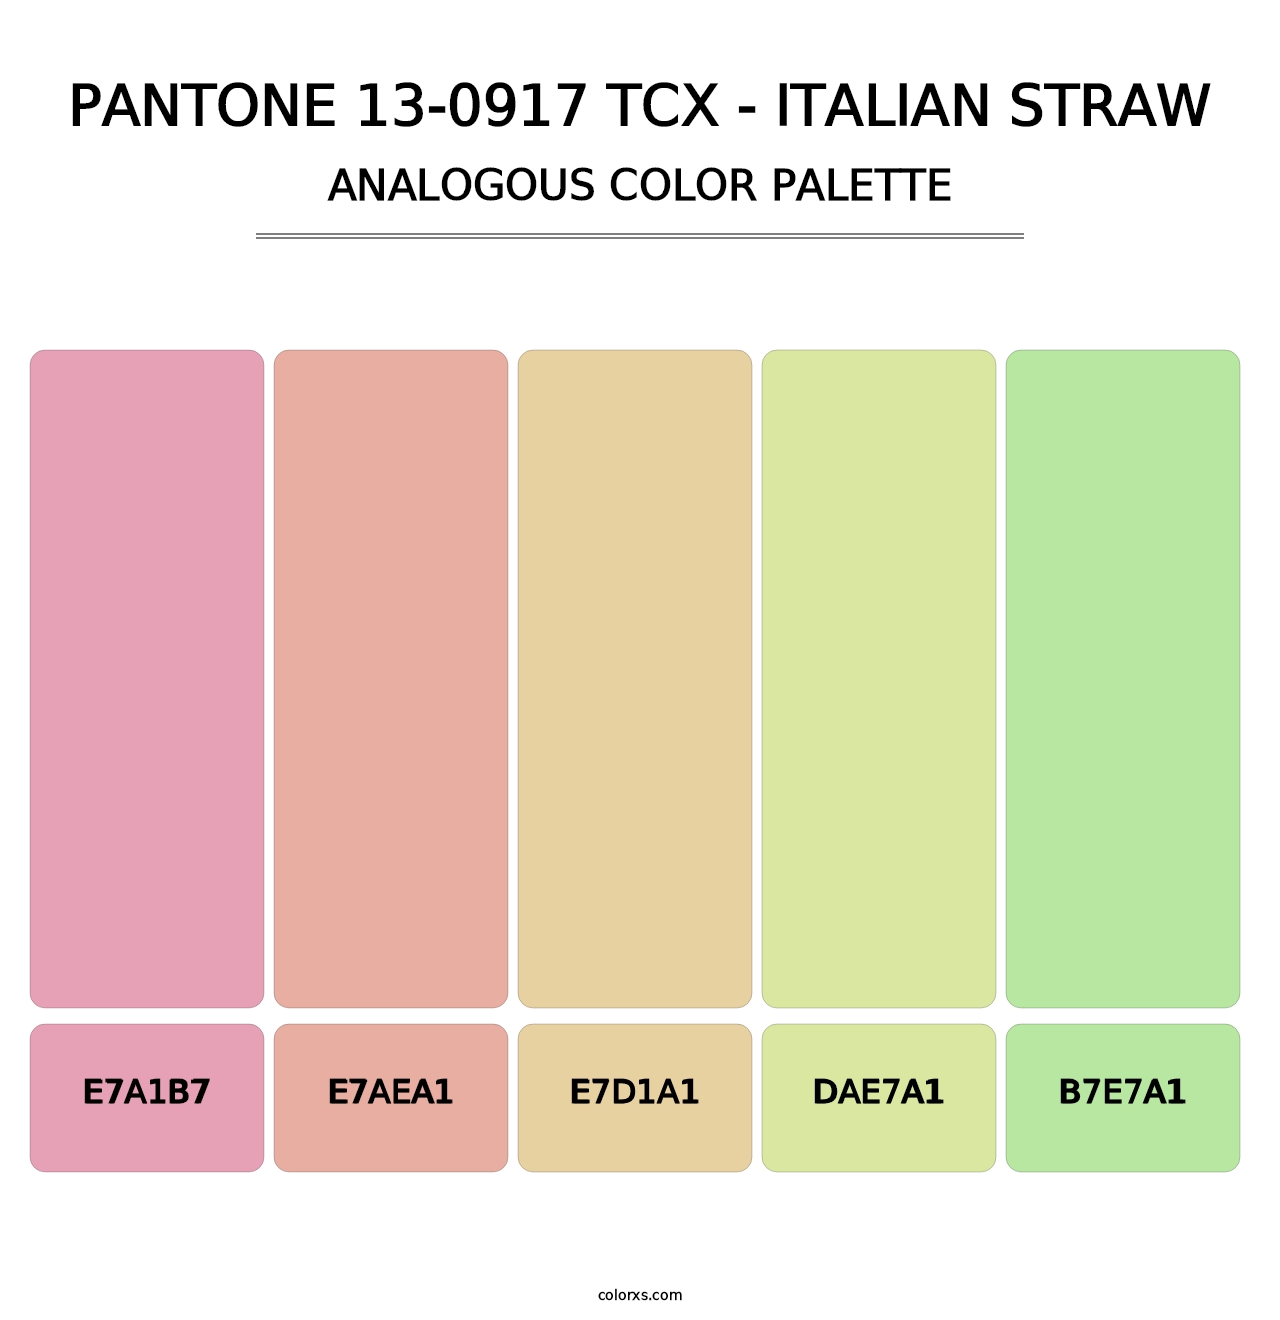 PANTONE 13-0917 TCX - Italian Straw - Analogous Color Palette